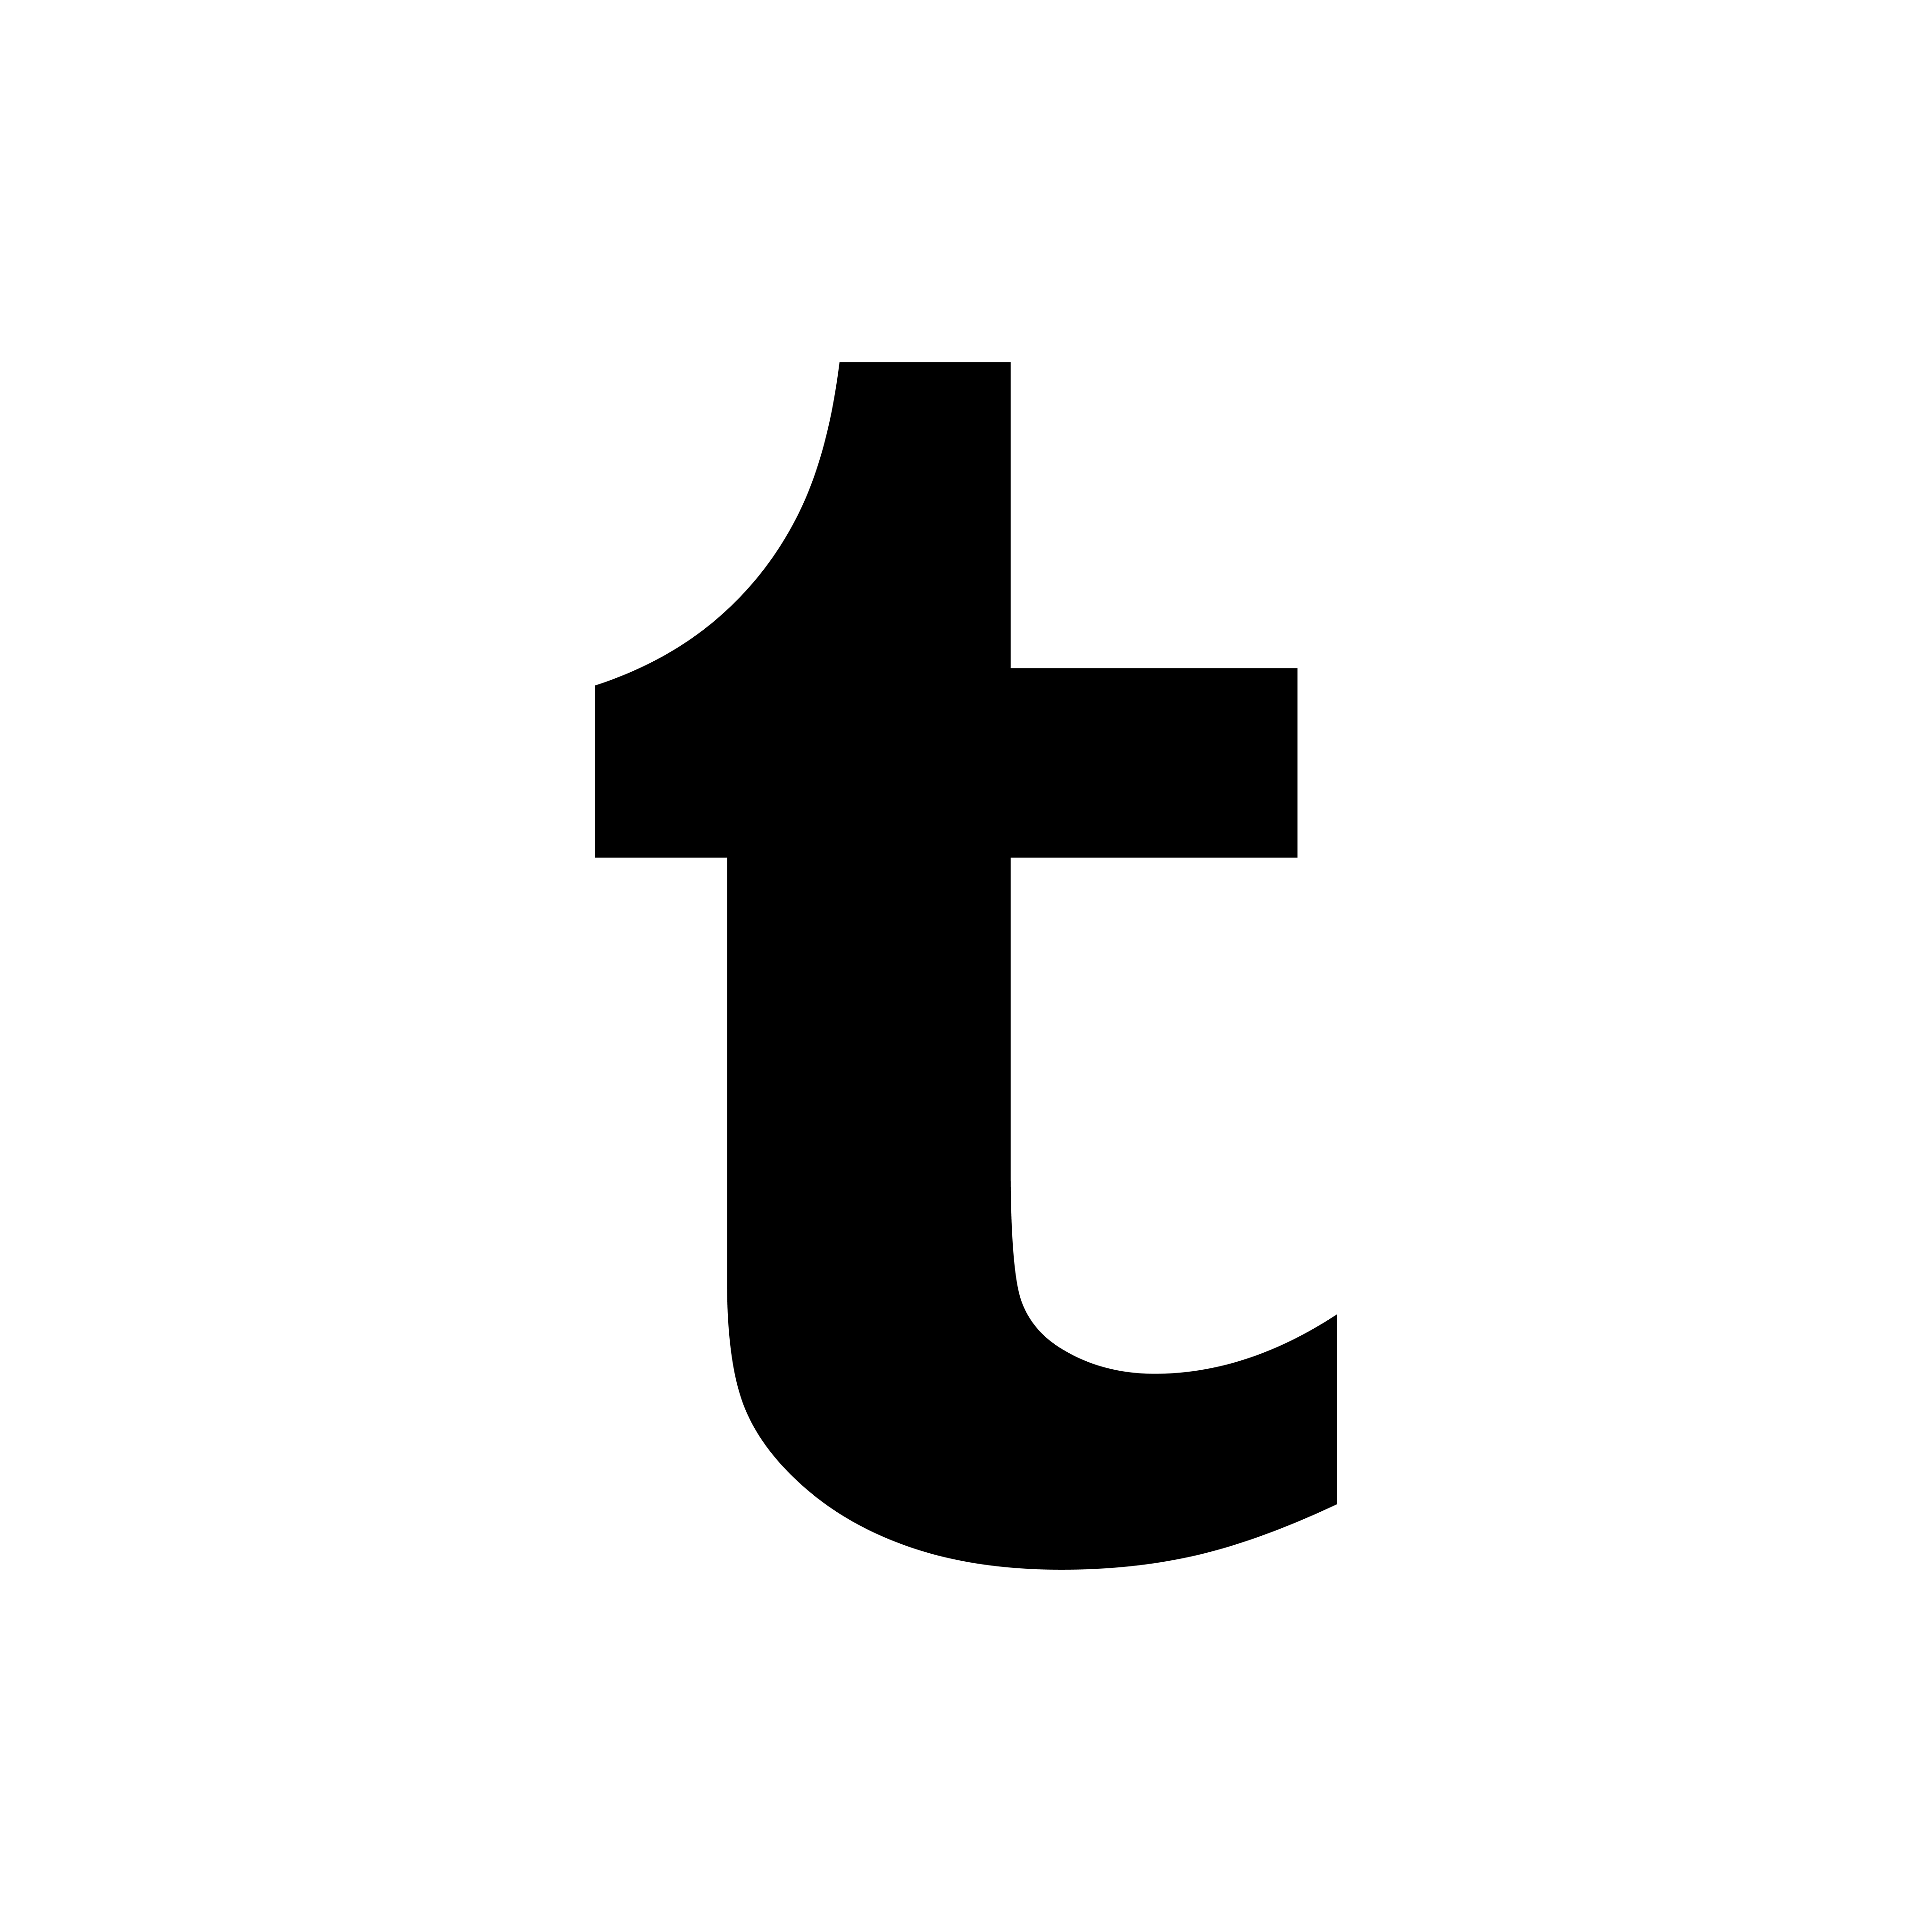 Black and White Tumblr Logo - White Tumblr Vector Logo Png Image